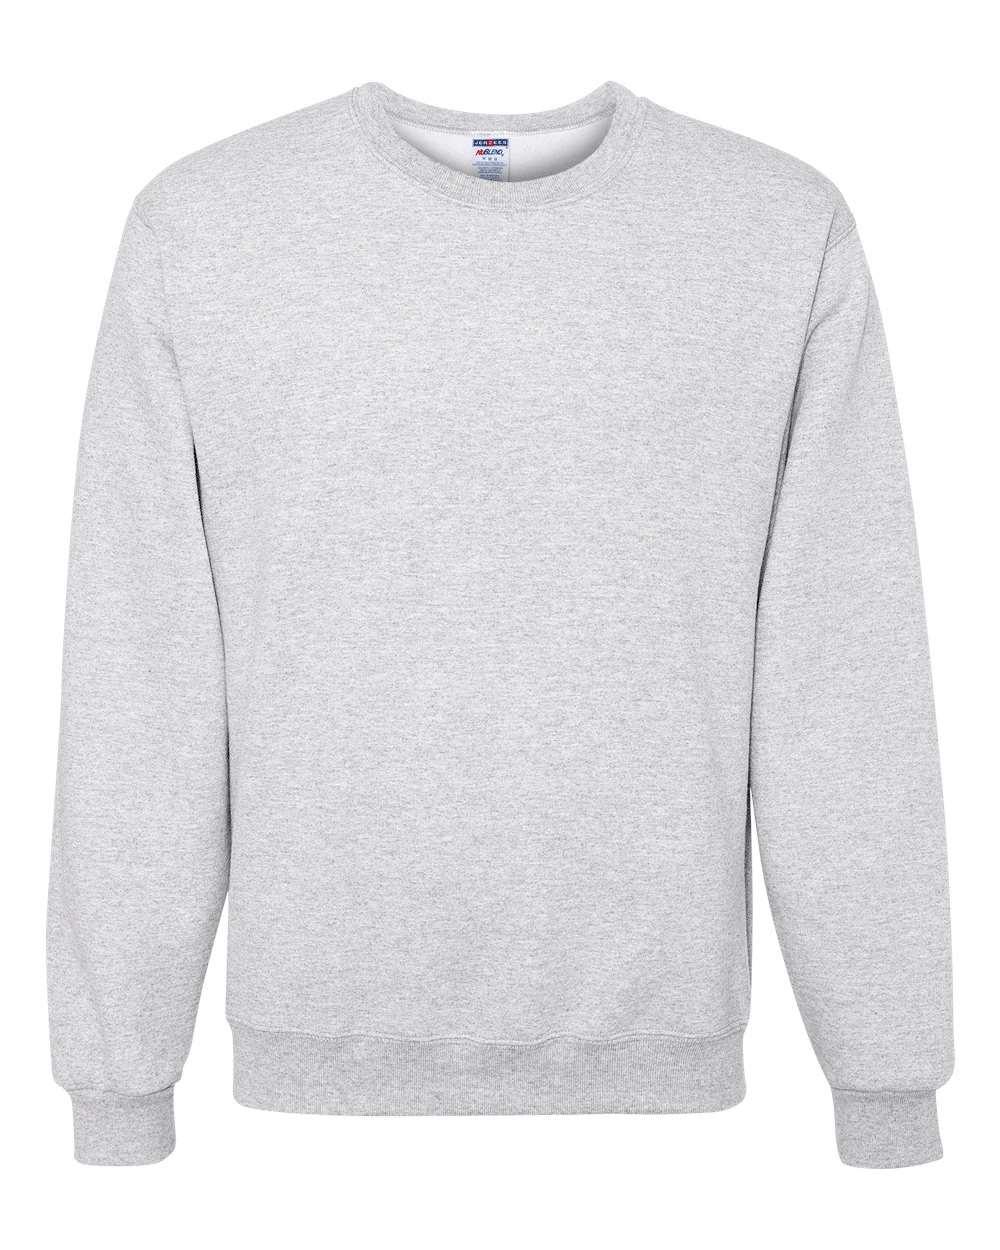 JERZEES Mens Blank NuBlend Crewneck Sweatshirt 562MR up to 5XL | eBay